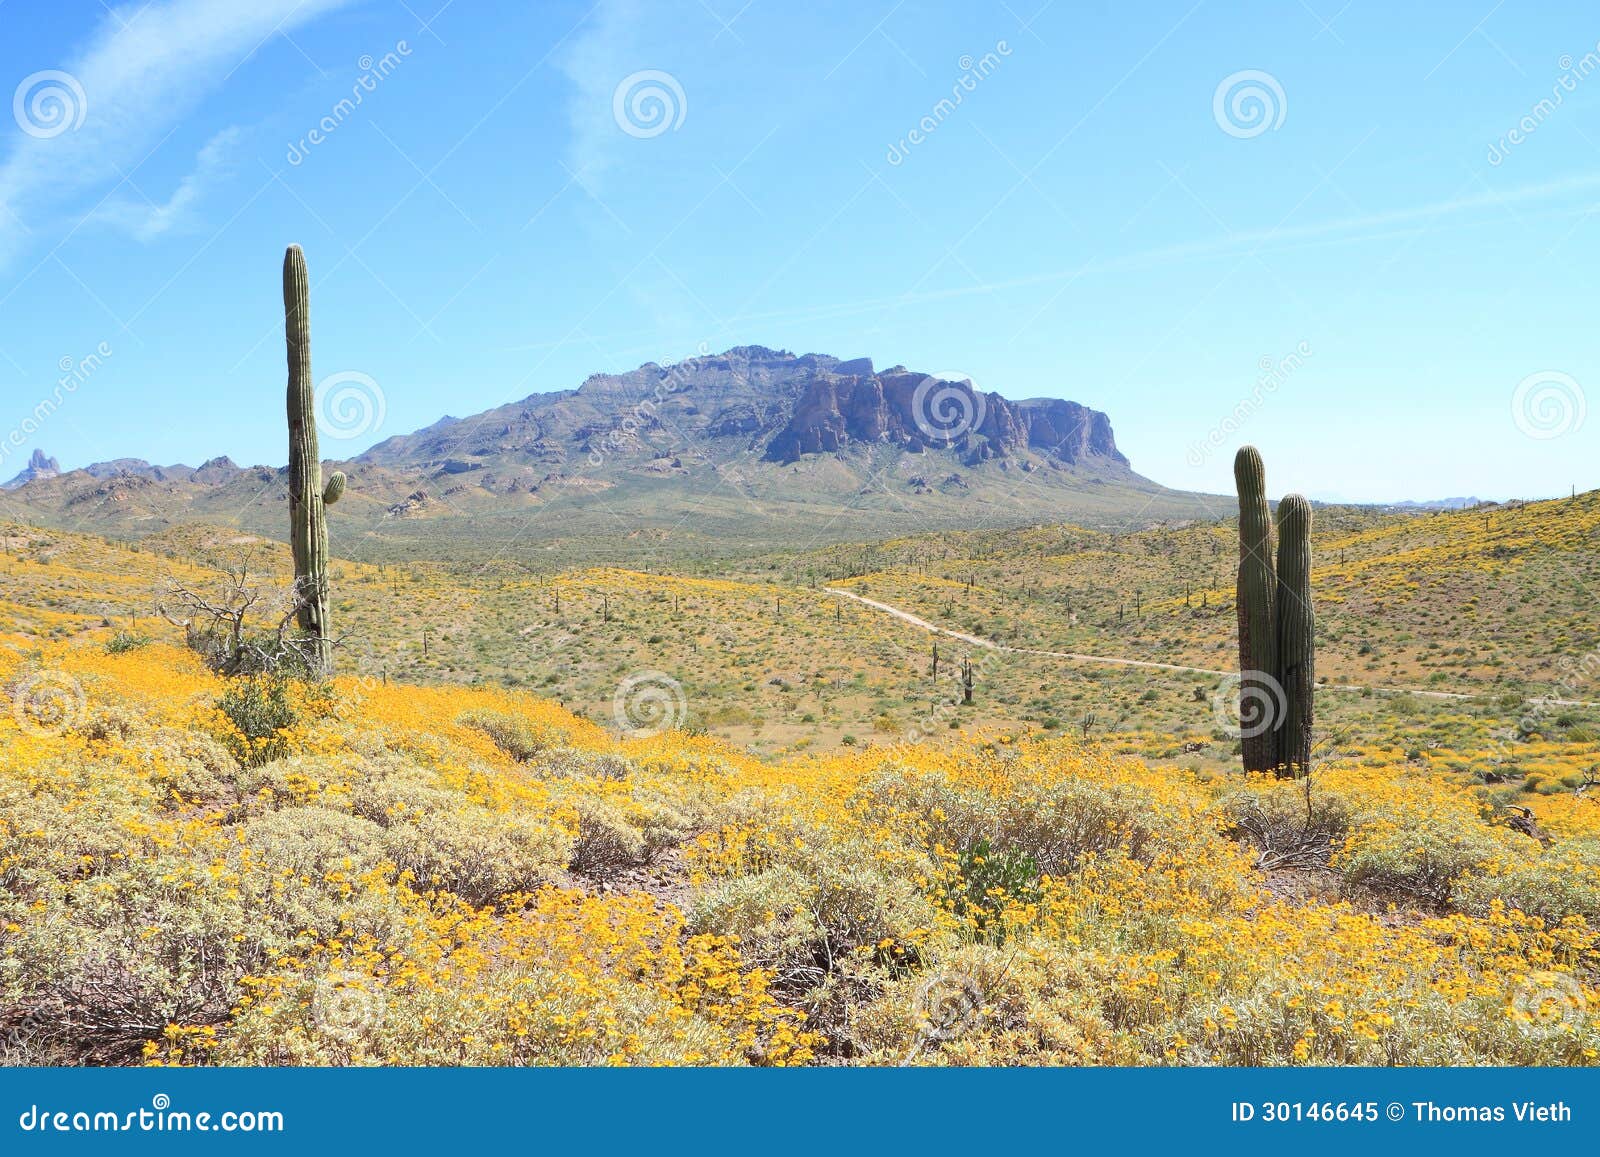 usa, az: blooming sonoran desert - landscape